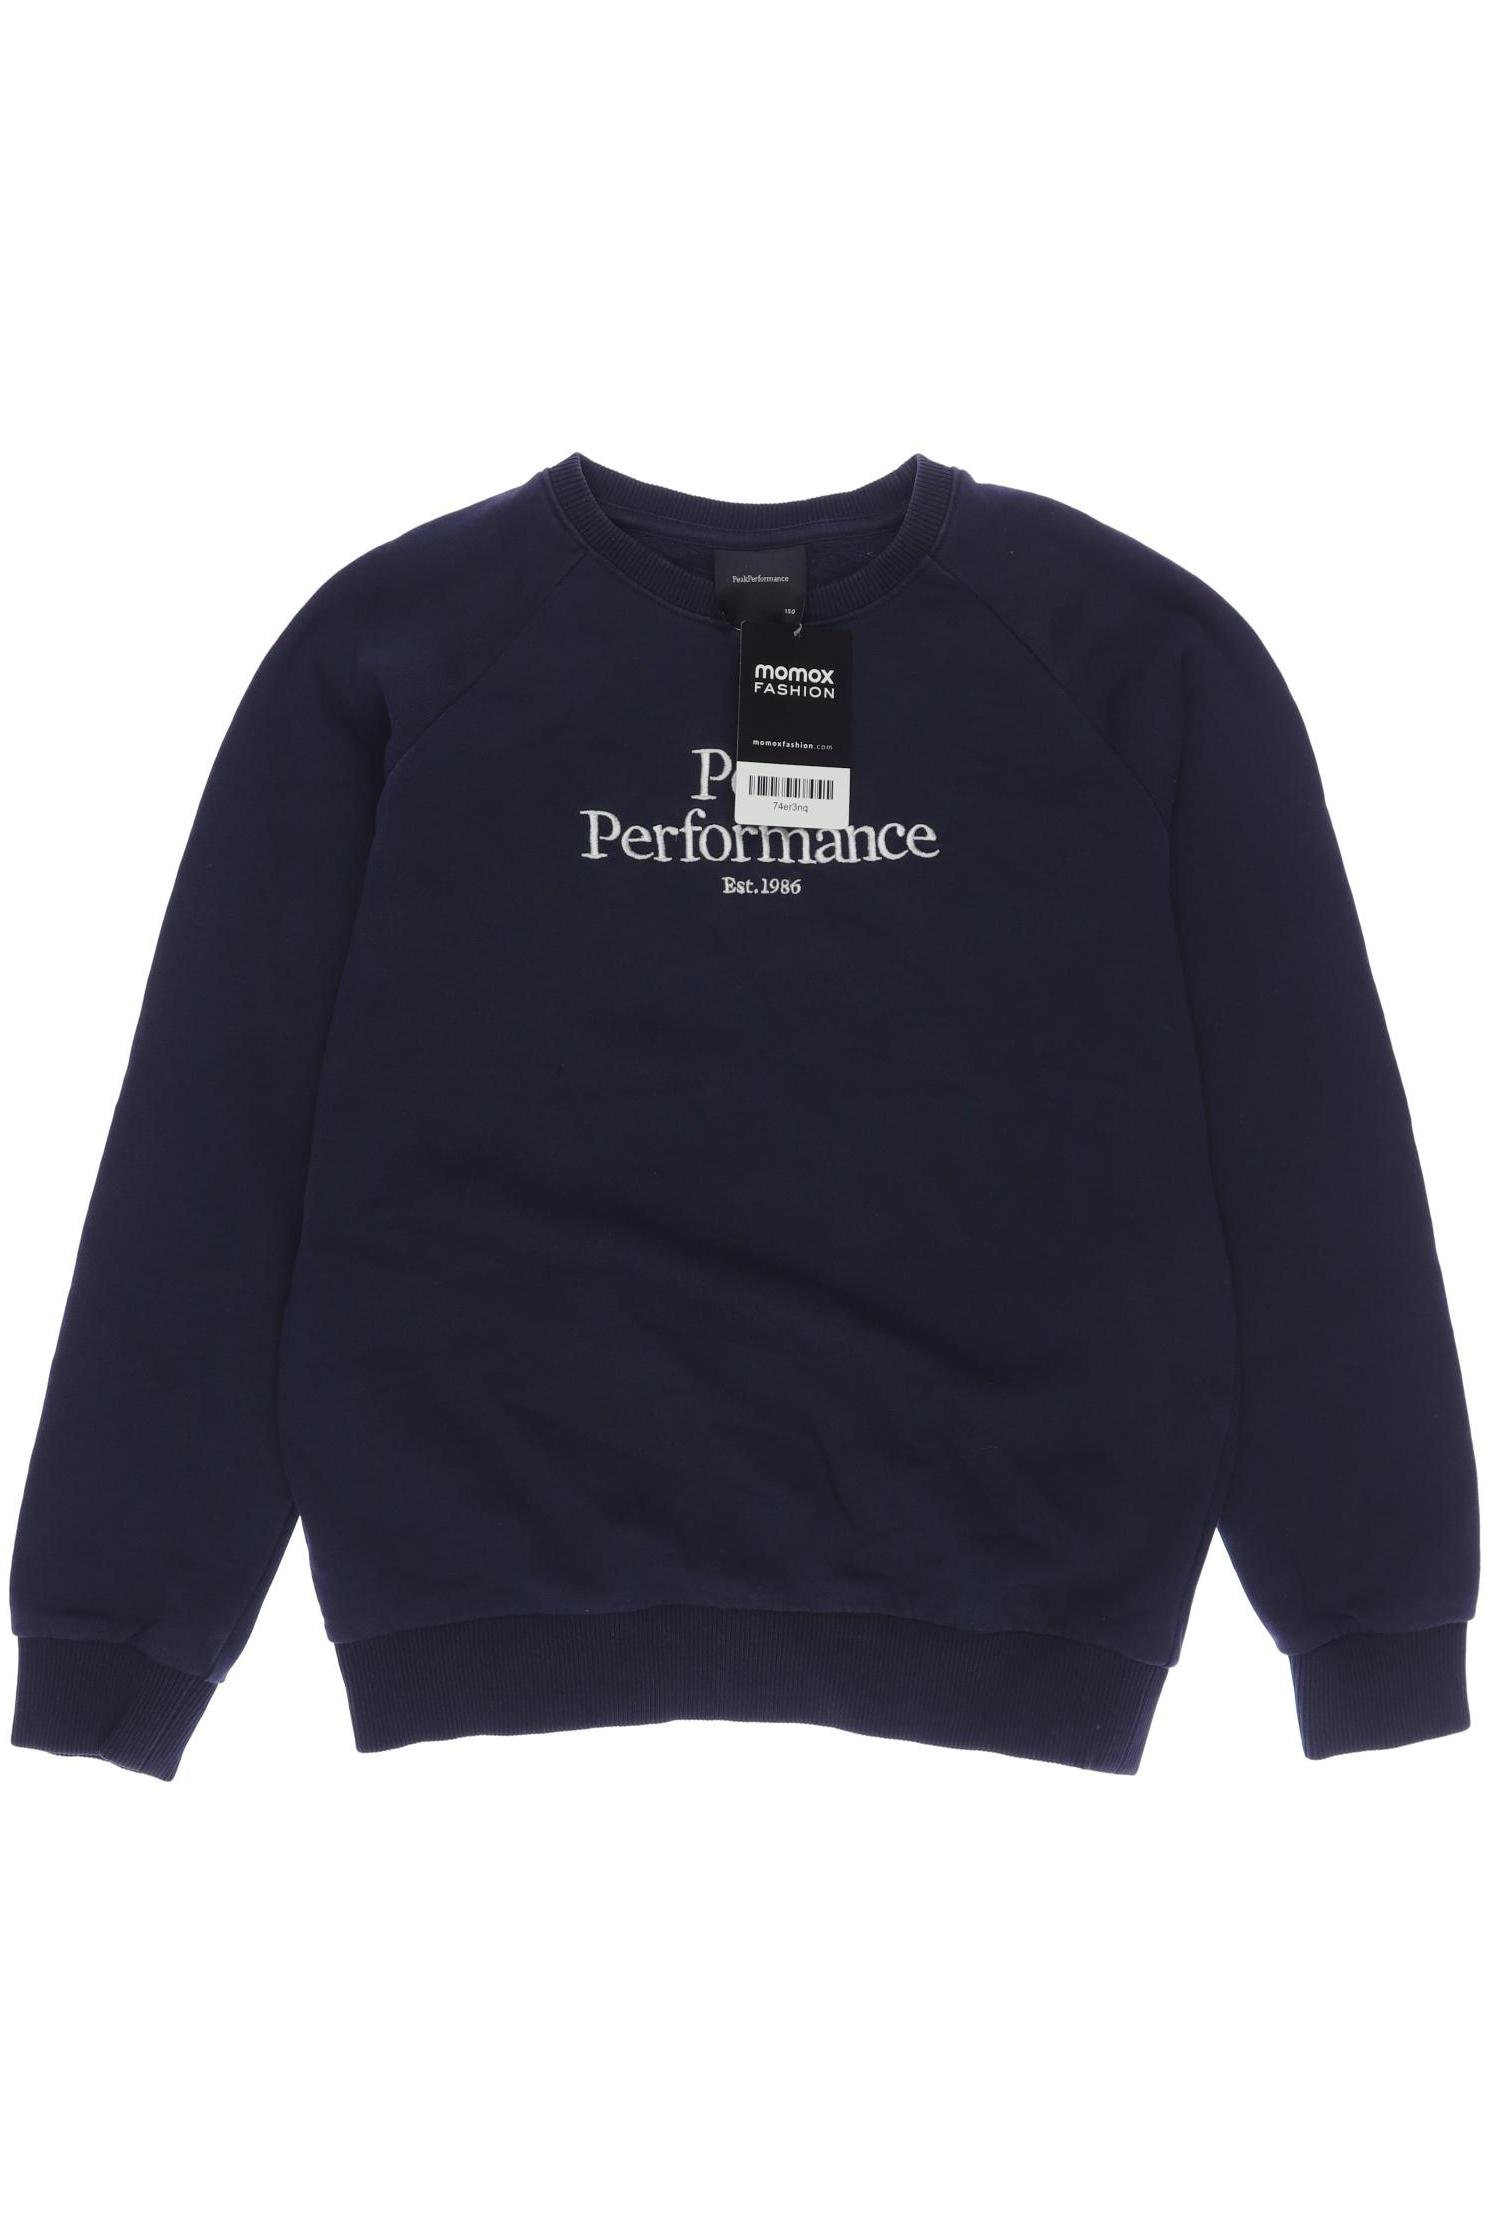 Peak Performance Jungen Hoodies & Sweater, marineblau von Peak Performance